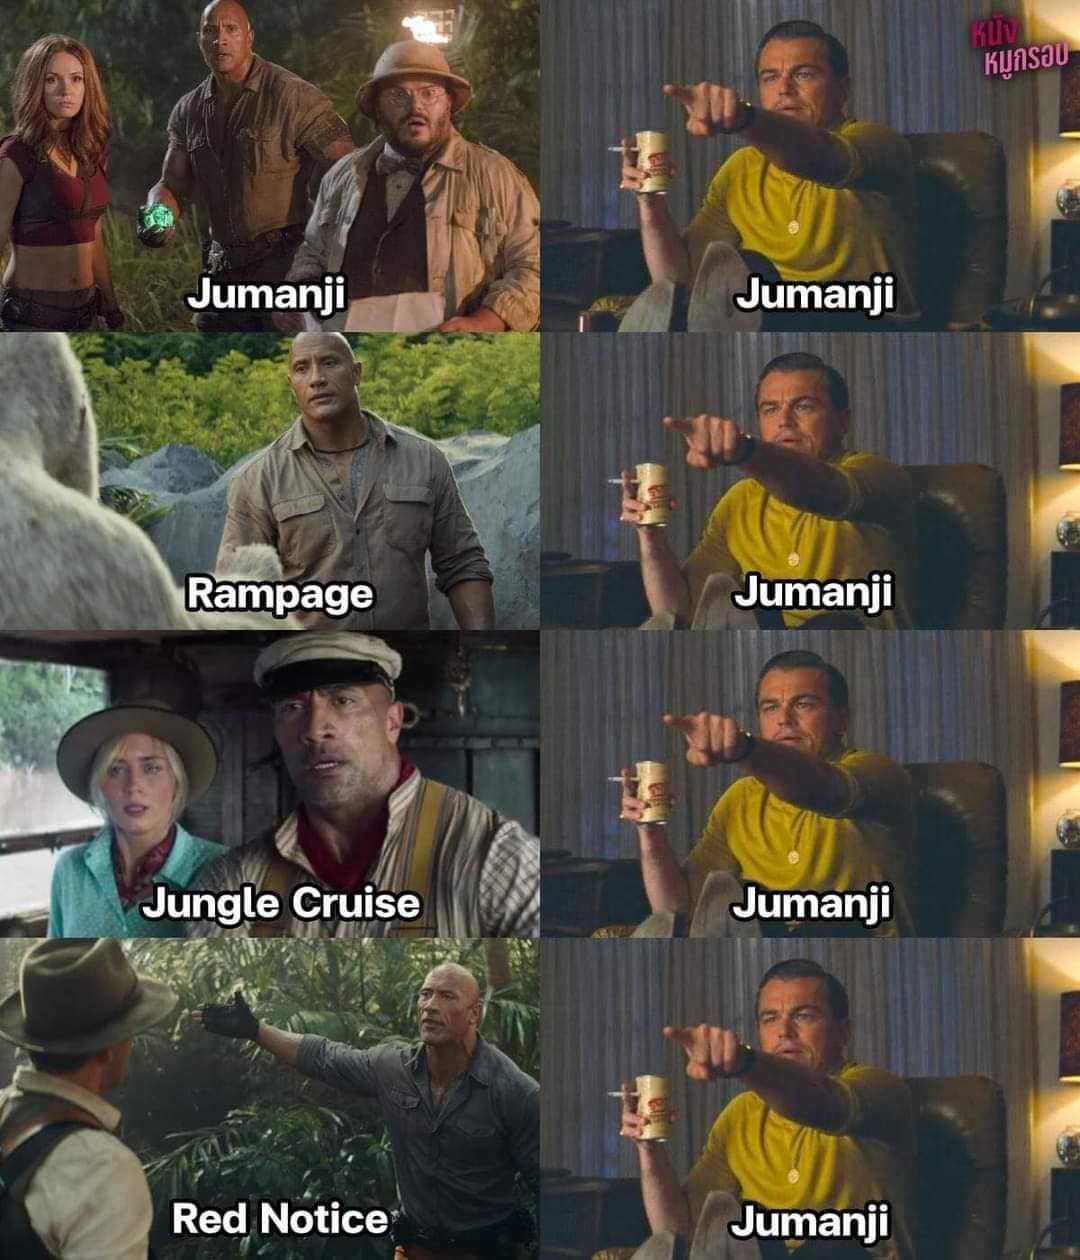 Jumanji. Jumanji. Rampage. Jumanji. Jungle Cruise. Jumanji. Red notice. Jumanji.